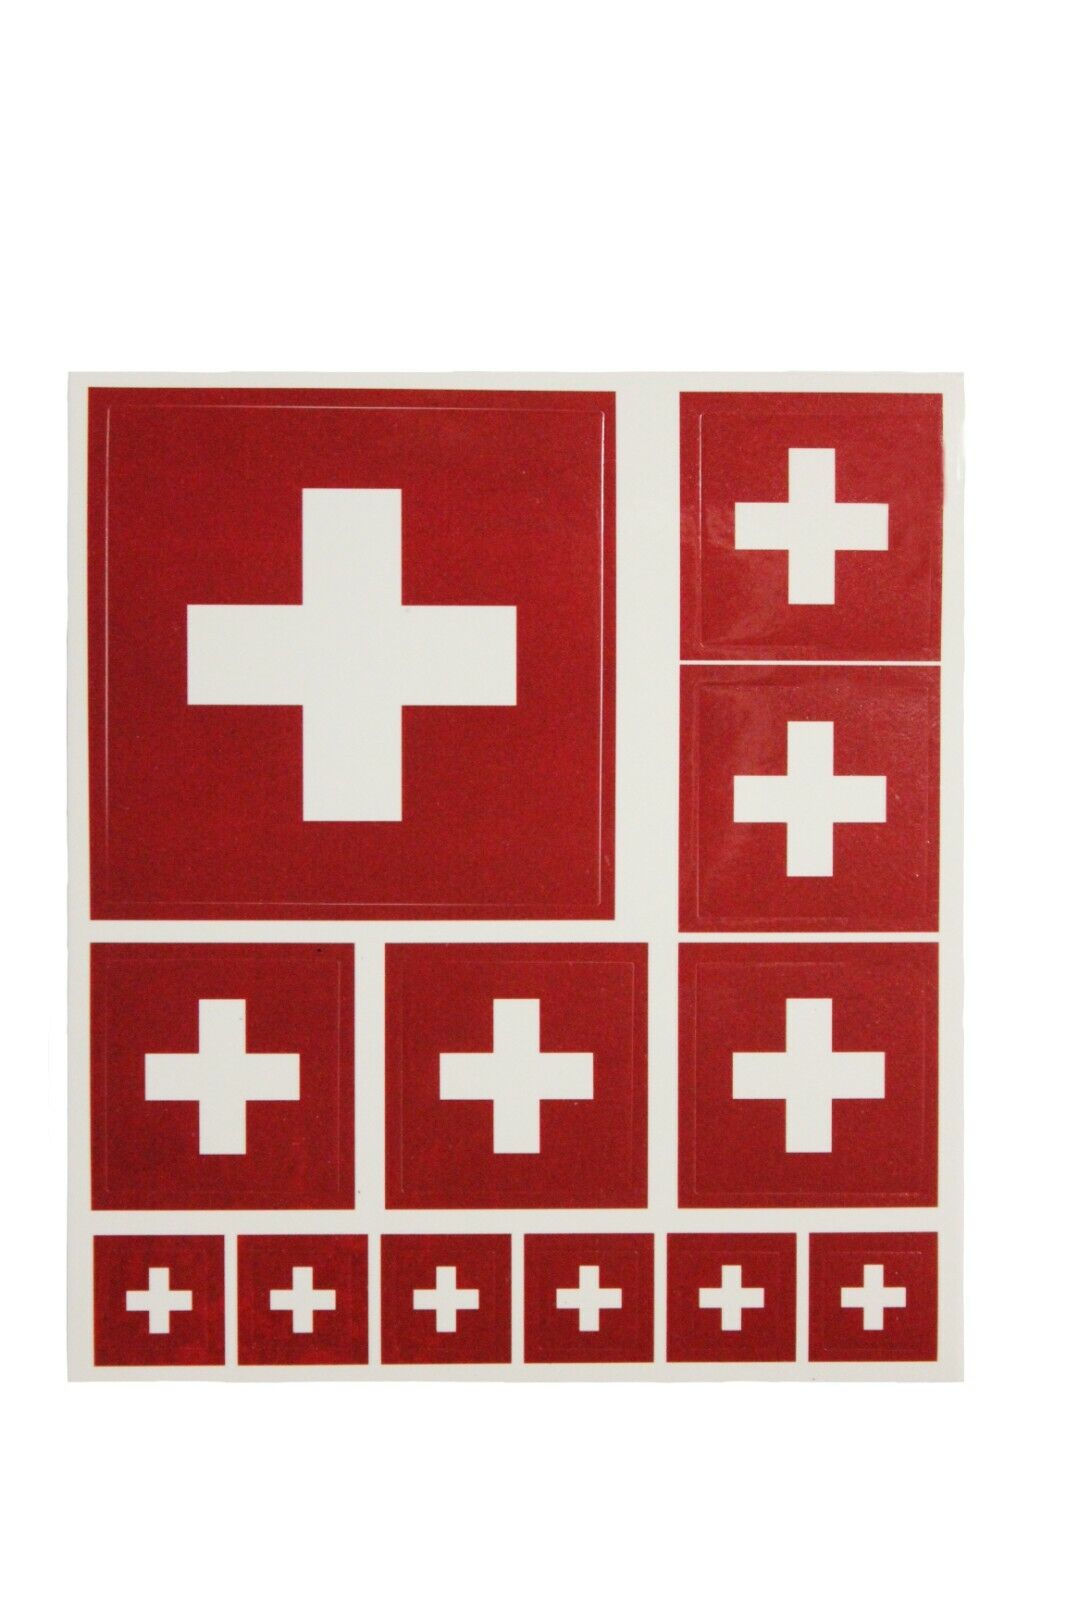 SWITZERLAND Country Flag , Set Of 7  VINYL Flag STICKERS, 3 Sizes ..New